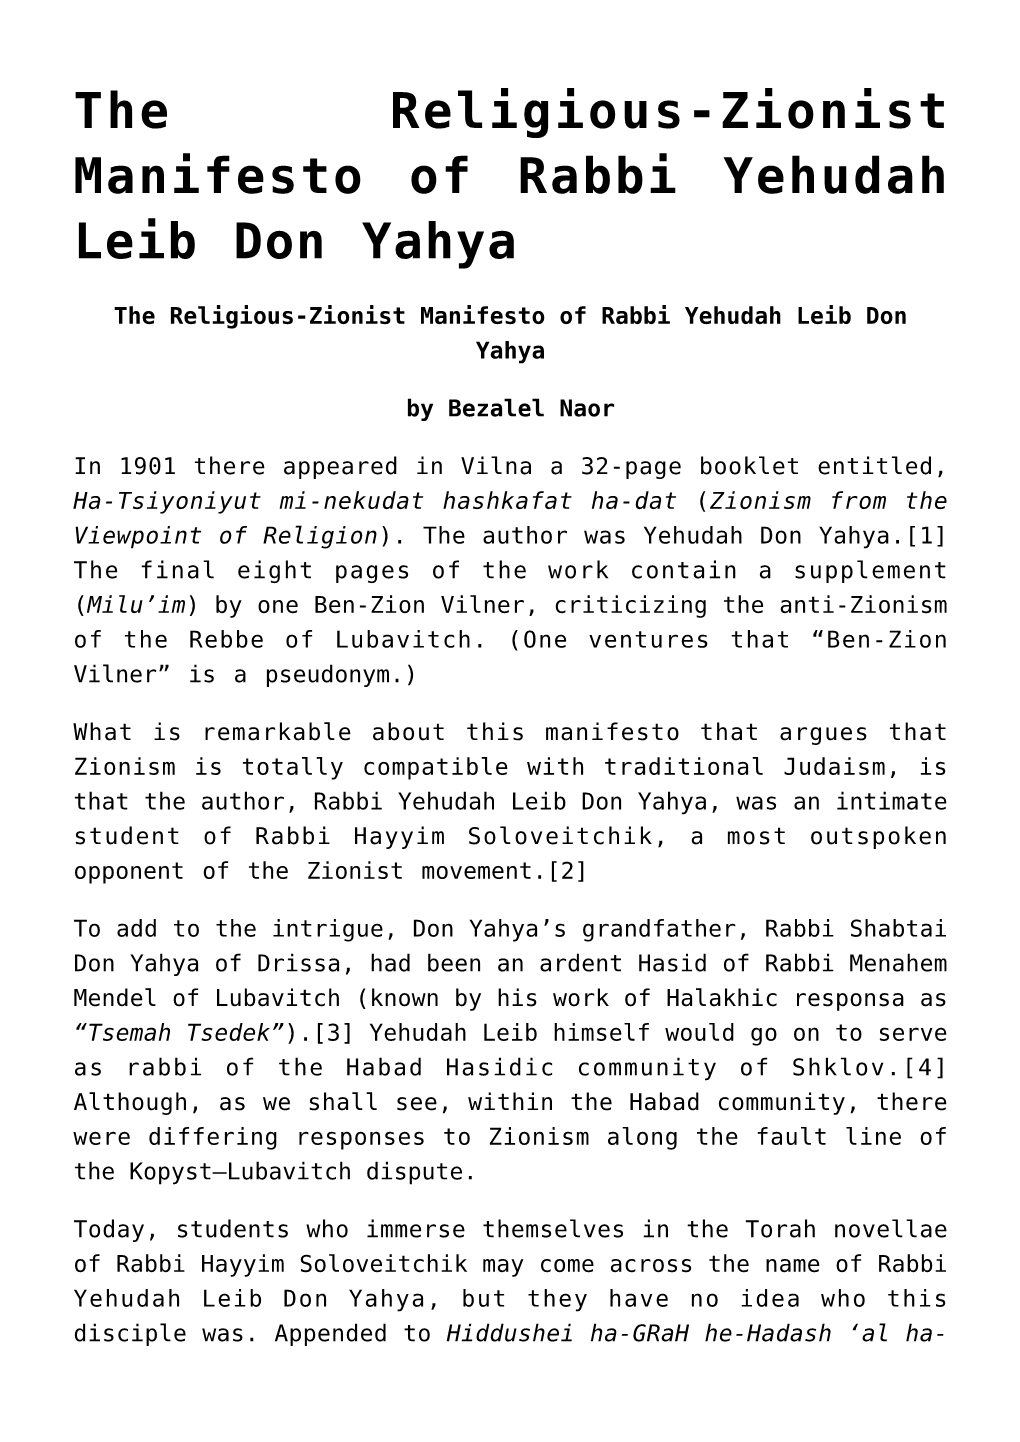 The Religious-Zionist Manifesto of Rabbi Yehudah Leib Don Yahya